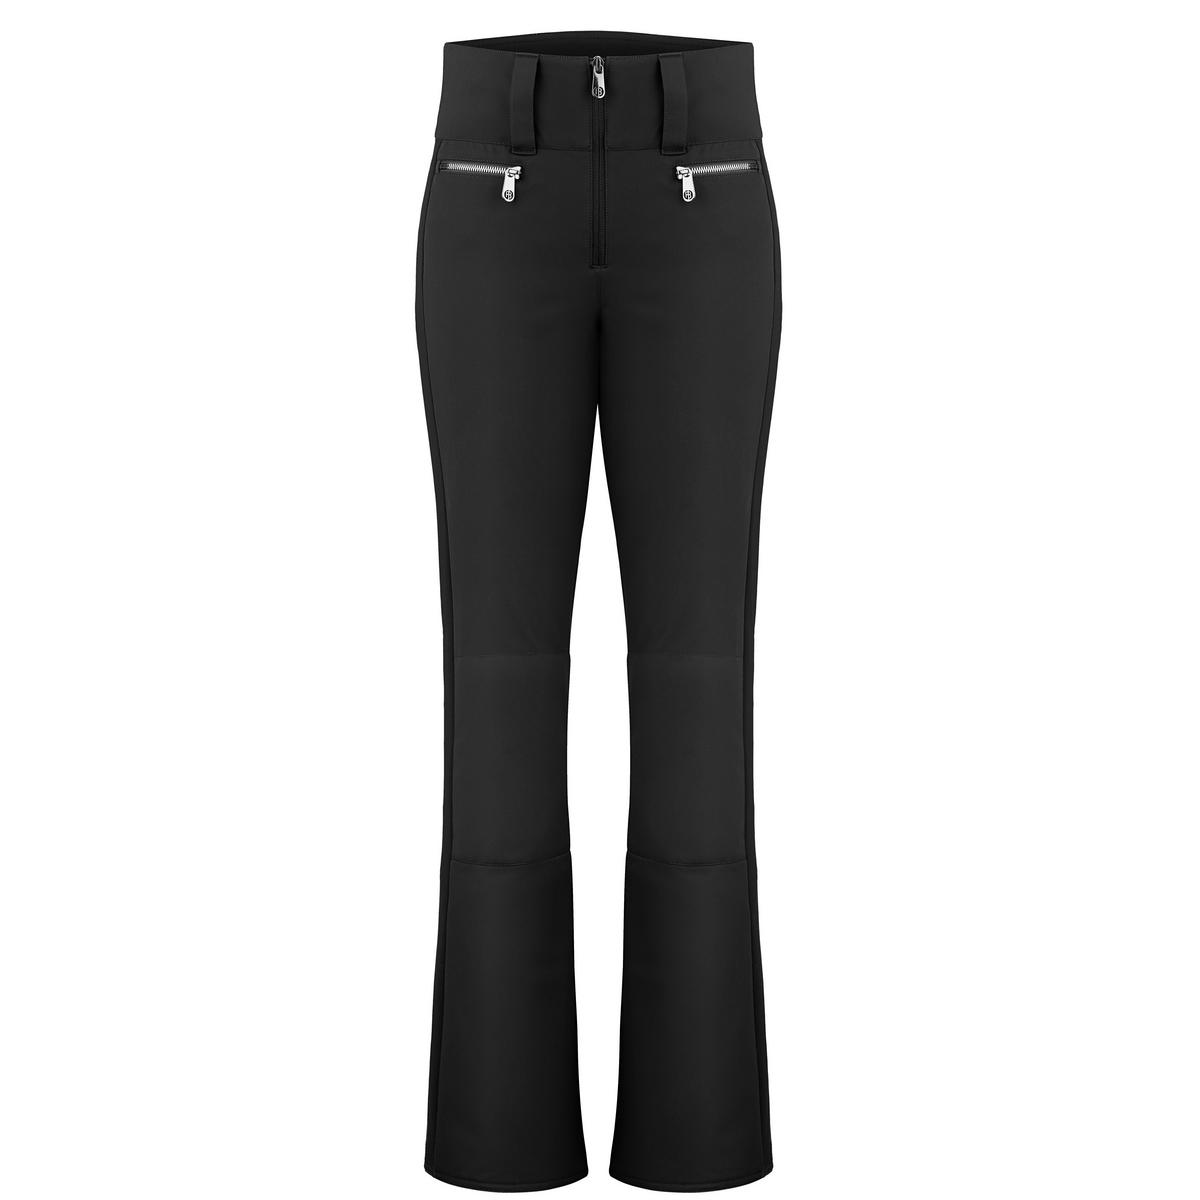 Poivre Blanc Women's Stretch Lux Ski Pants (Short) - Black